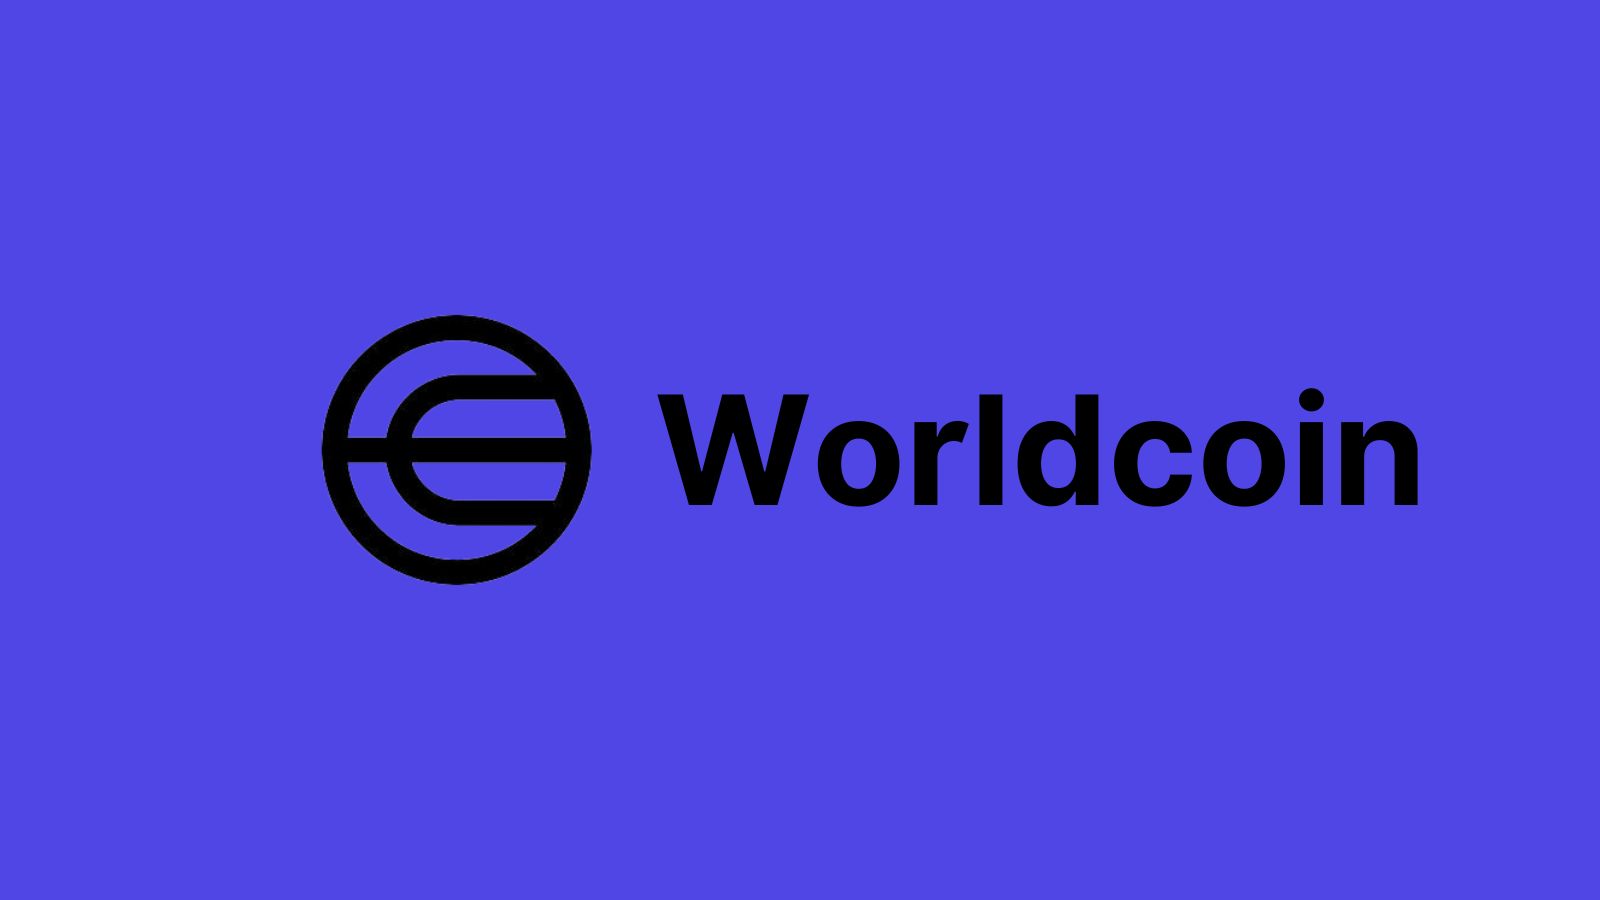 Worldcoin Logo